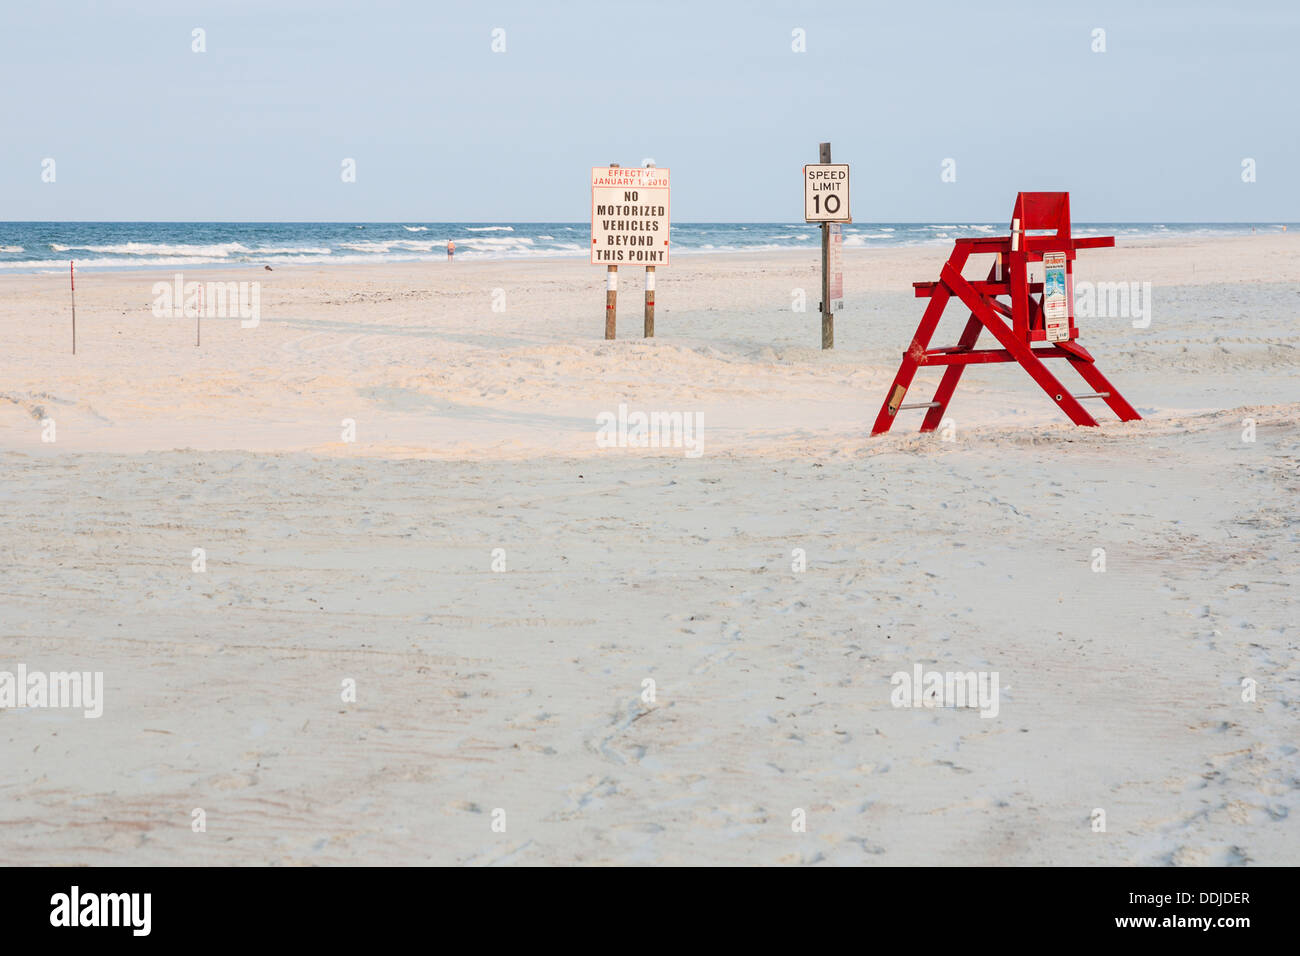 Unmanned red lifeguard station next to sign warning of no motorized traffic on Daytona Beach, Florida Stock Photo